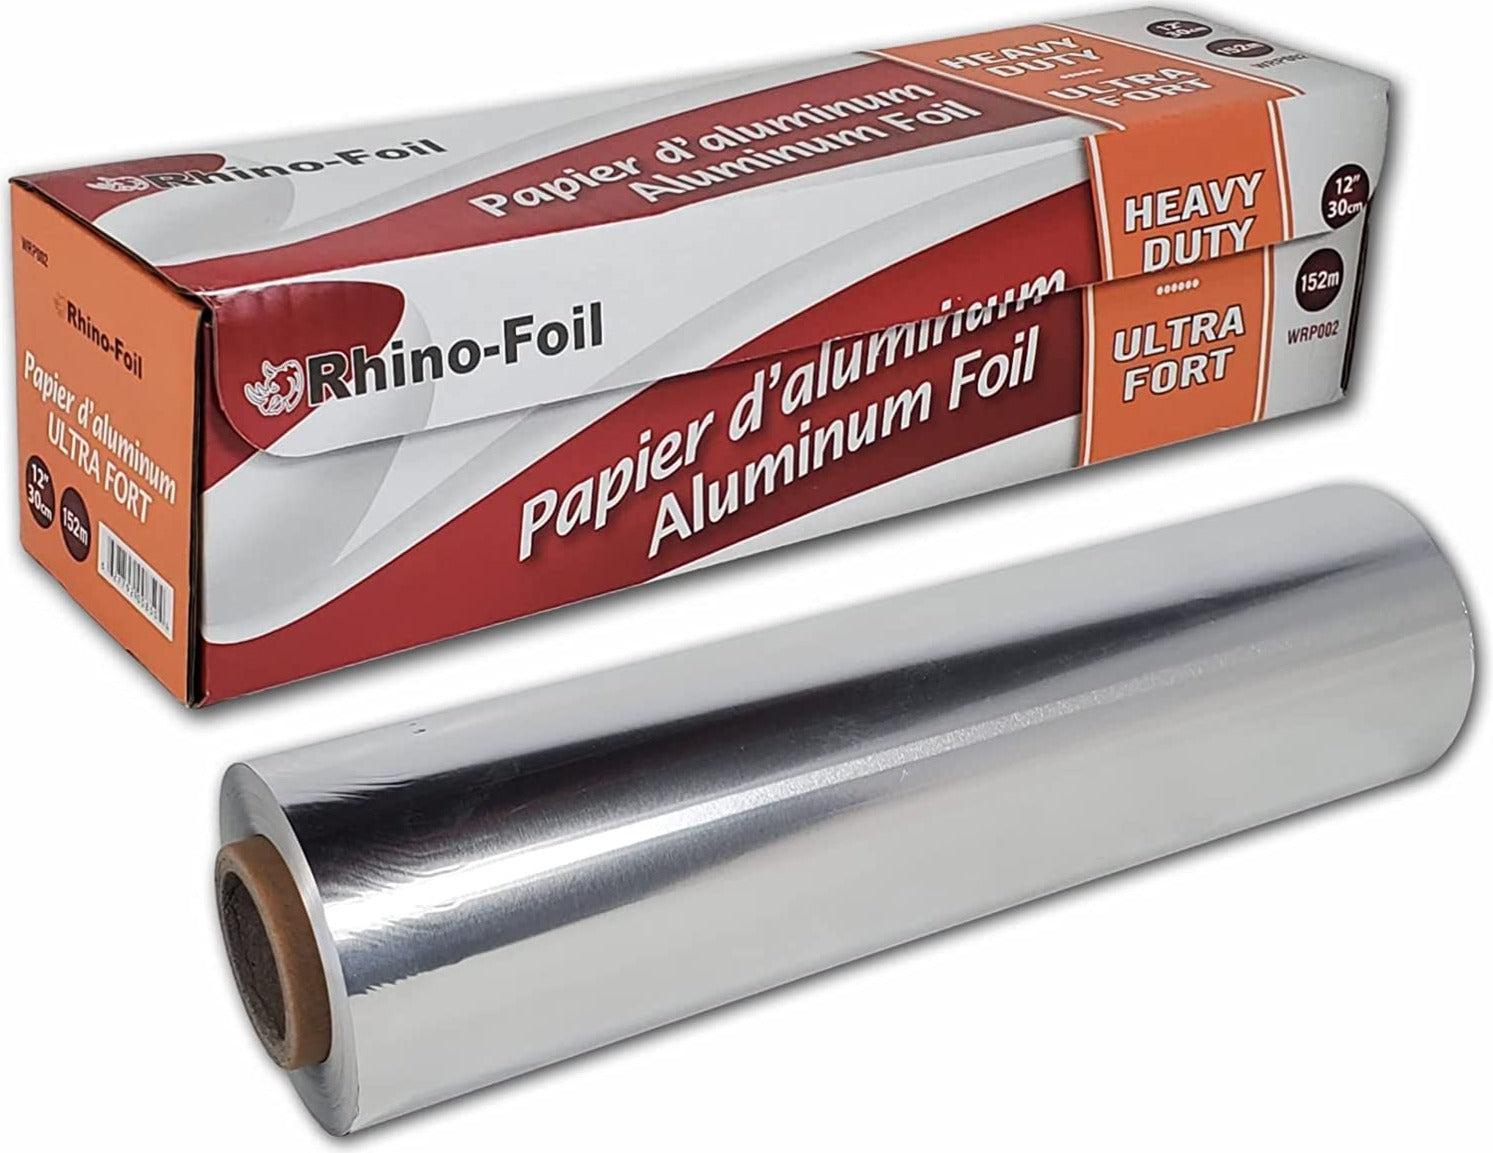 Rhino Aluminum Heavy Duty Aluminum Foil  Rhino 12 x 500 Foot Long Rol – OX  Plastics